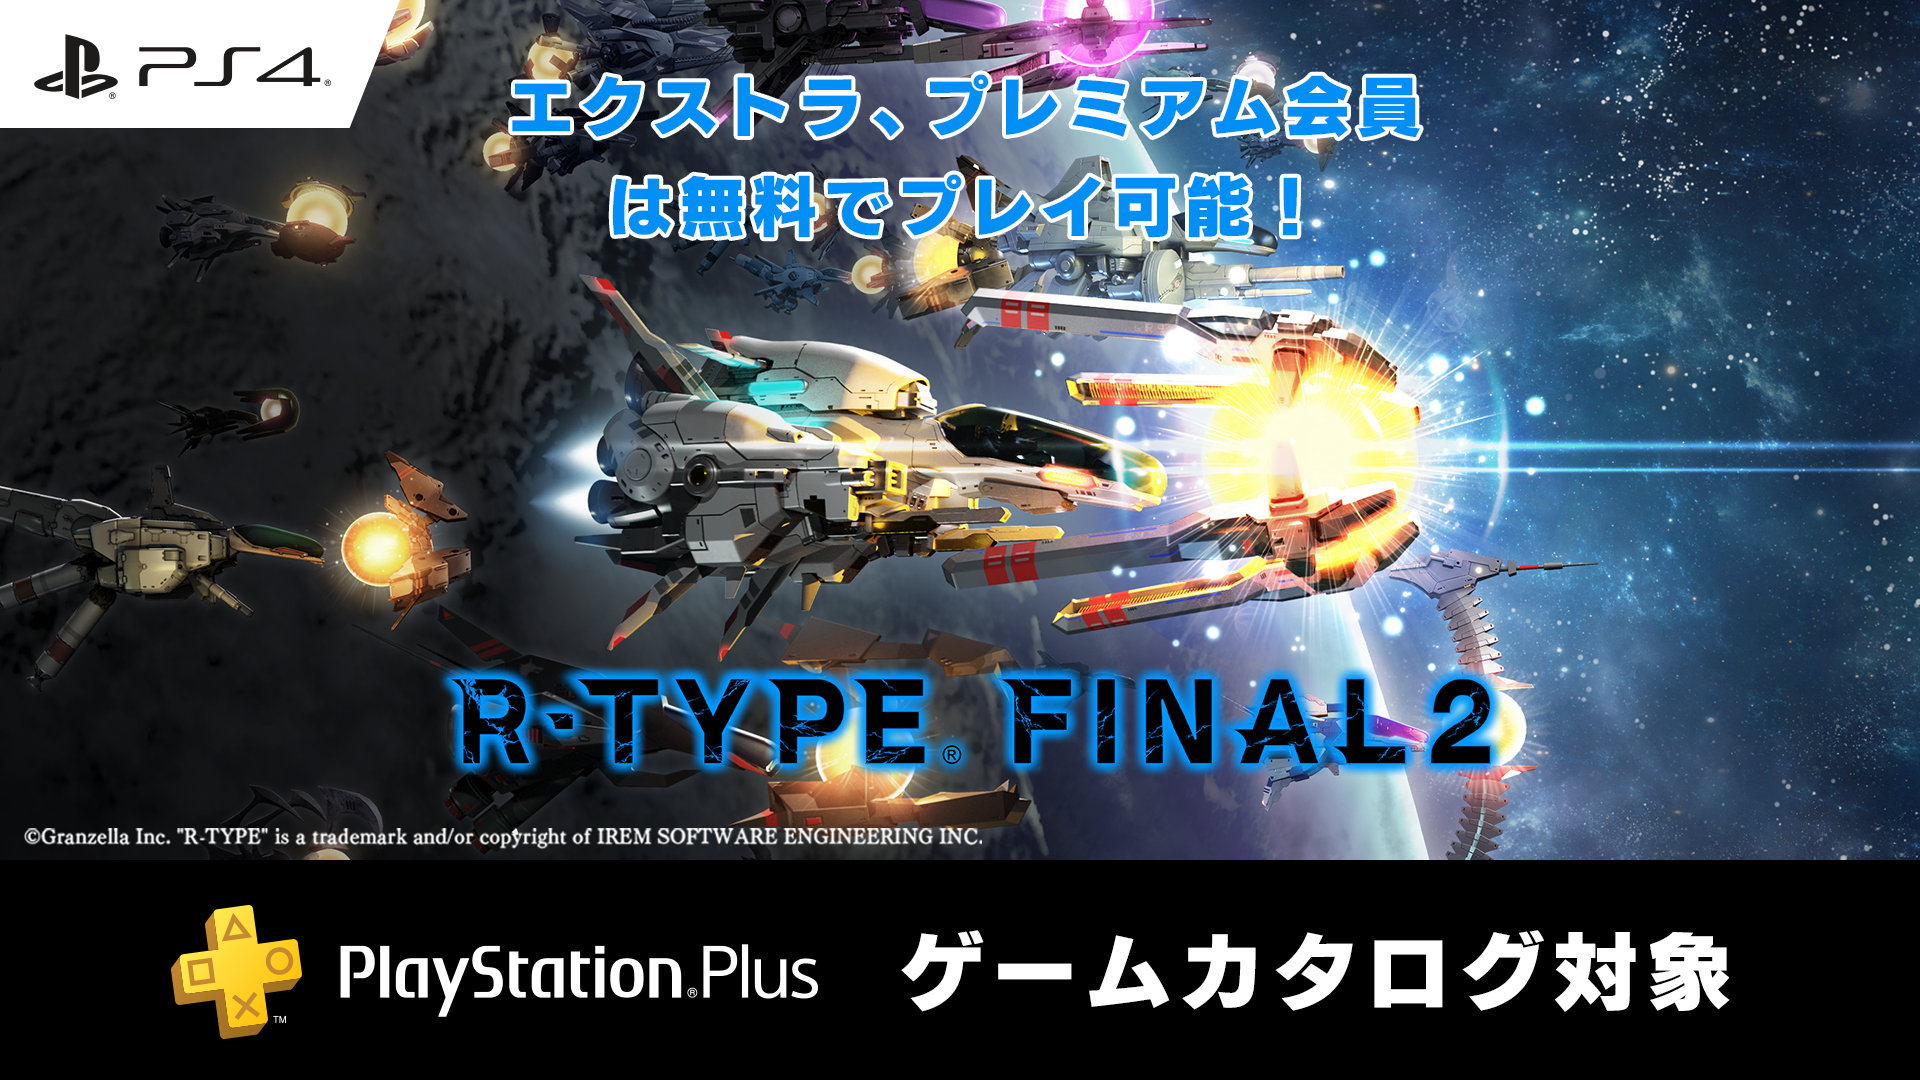 PlayStation®4用ソフト「R-TYPE FINAL 2」はPlayStation Plusのゲームカタログ対象商品です